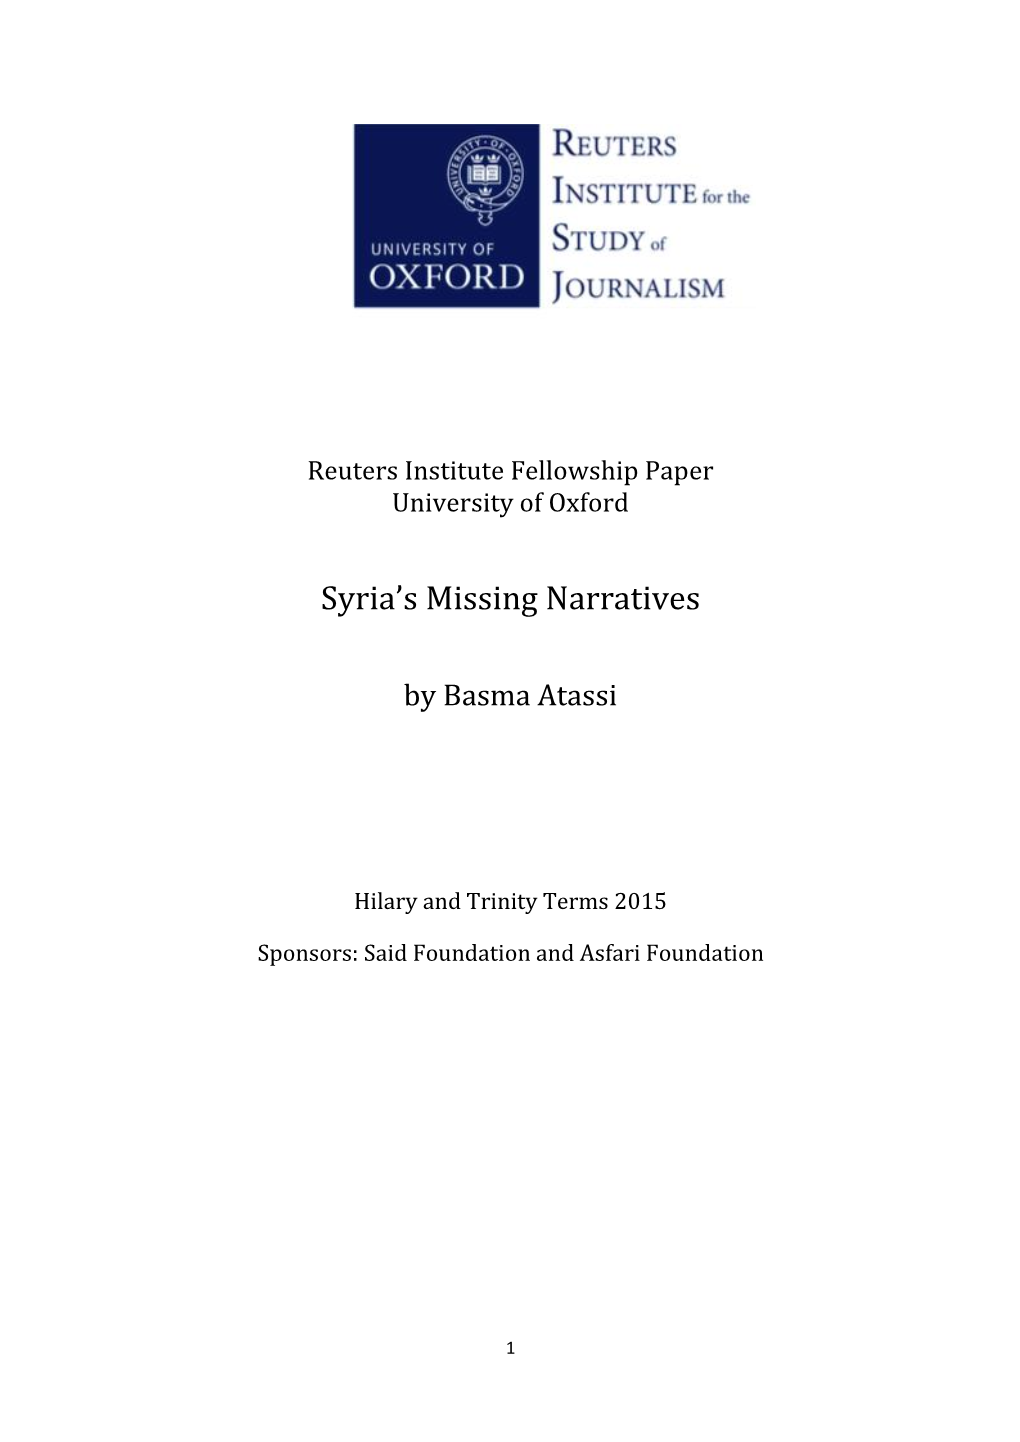 Syria's Missing Narratives